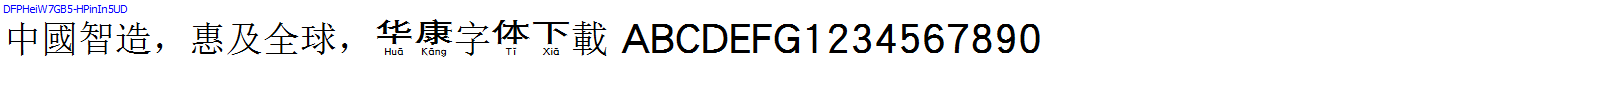 華康字體DFPHeiW7GB5-HPinIn5UD.TTF